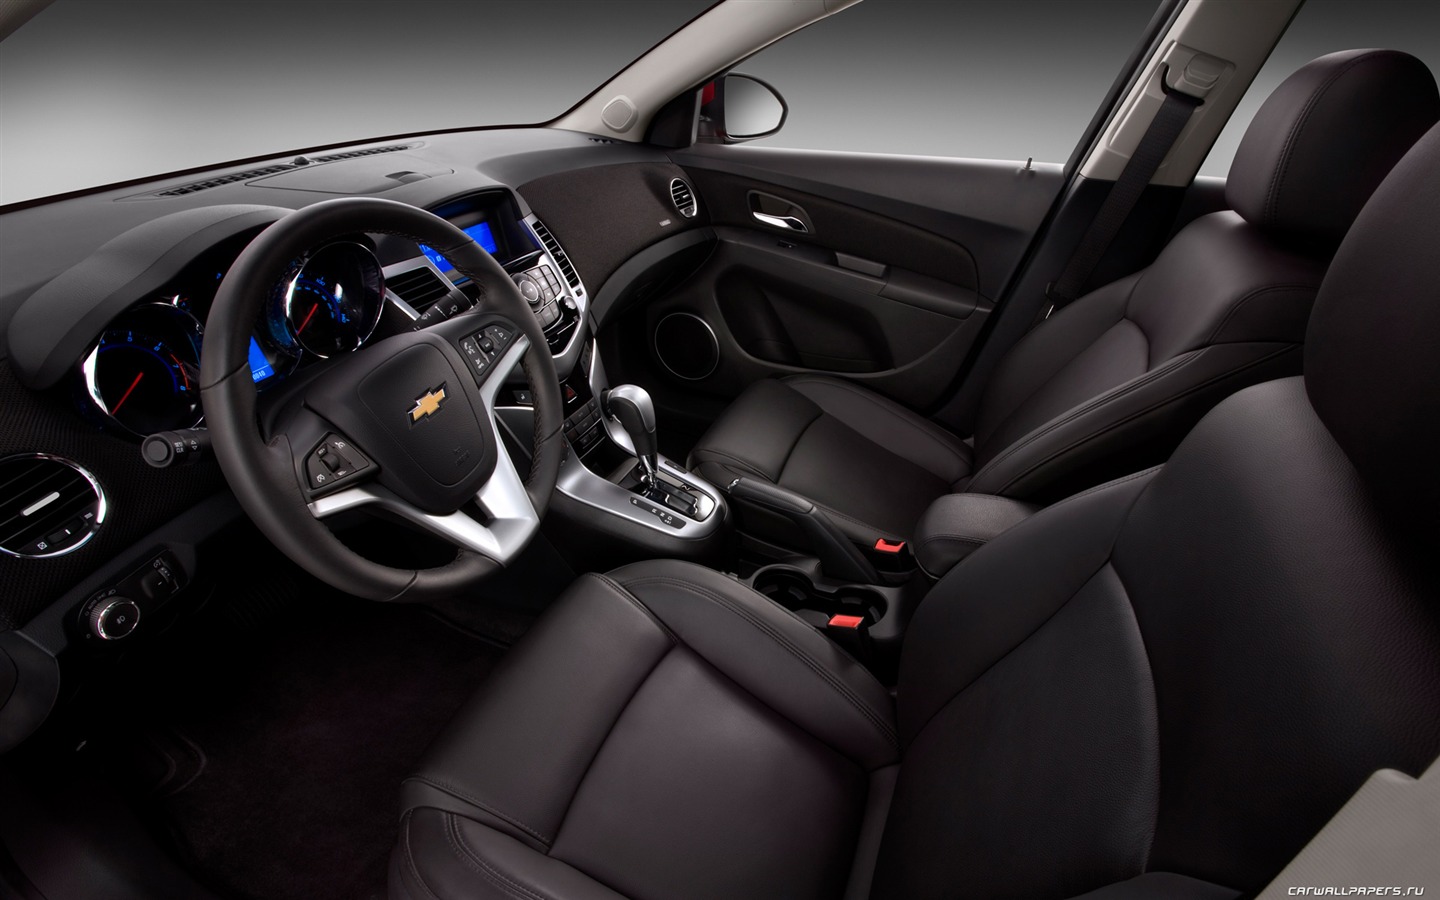 Chevrolet Cruze RS - 2011 雪佛蘭 #13 - 1440x900